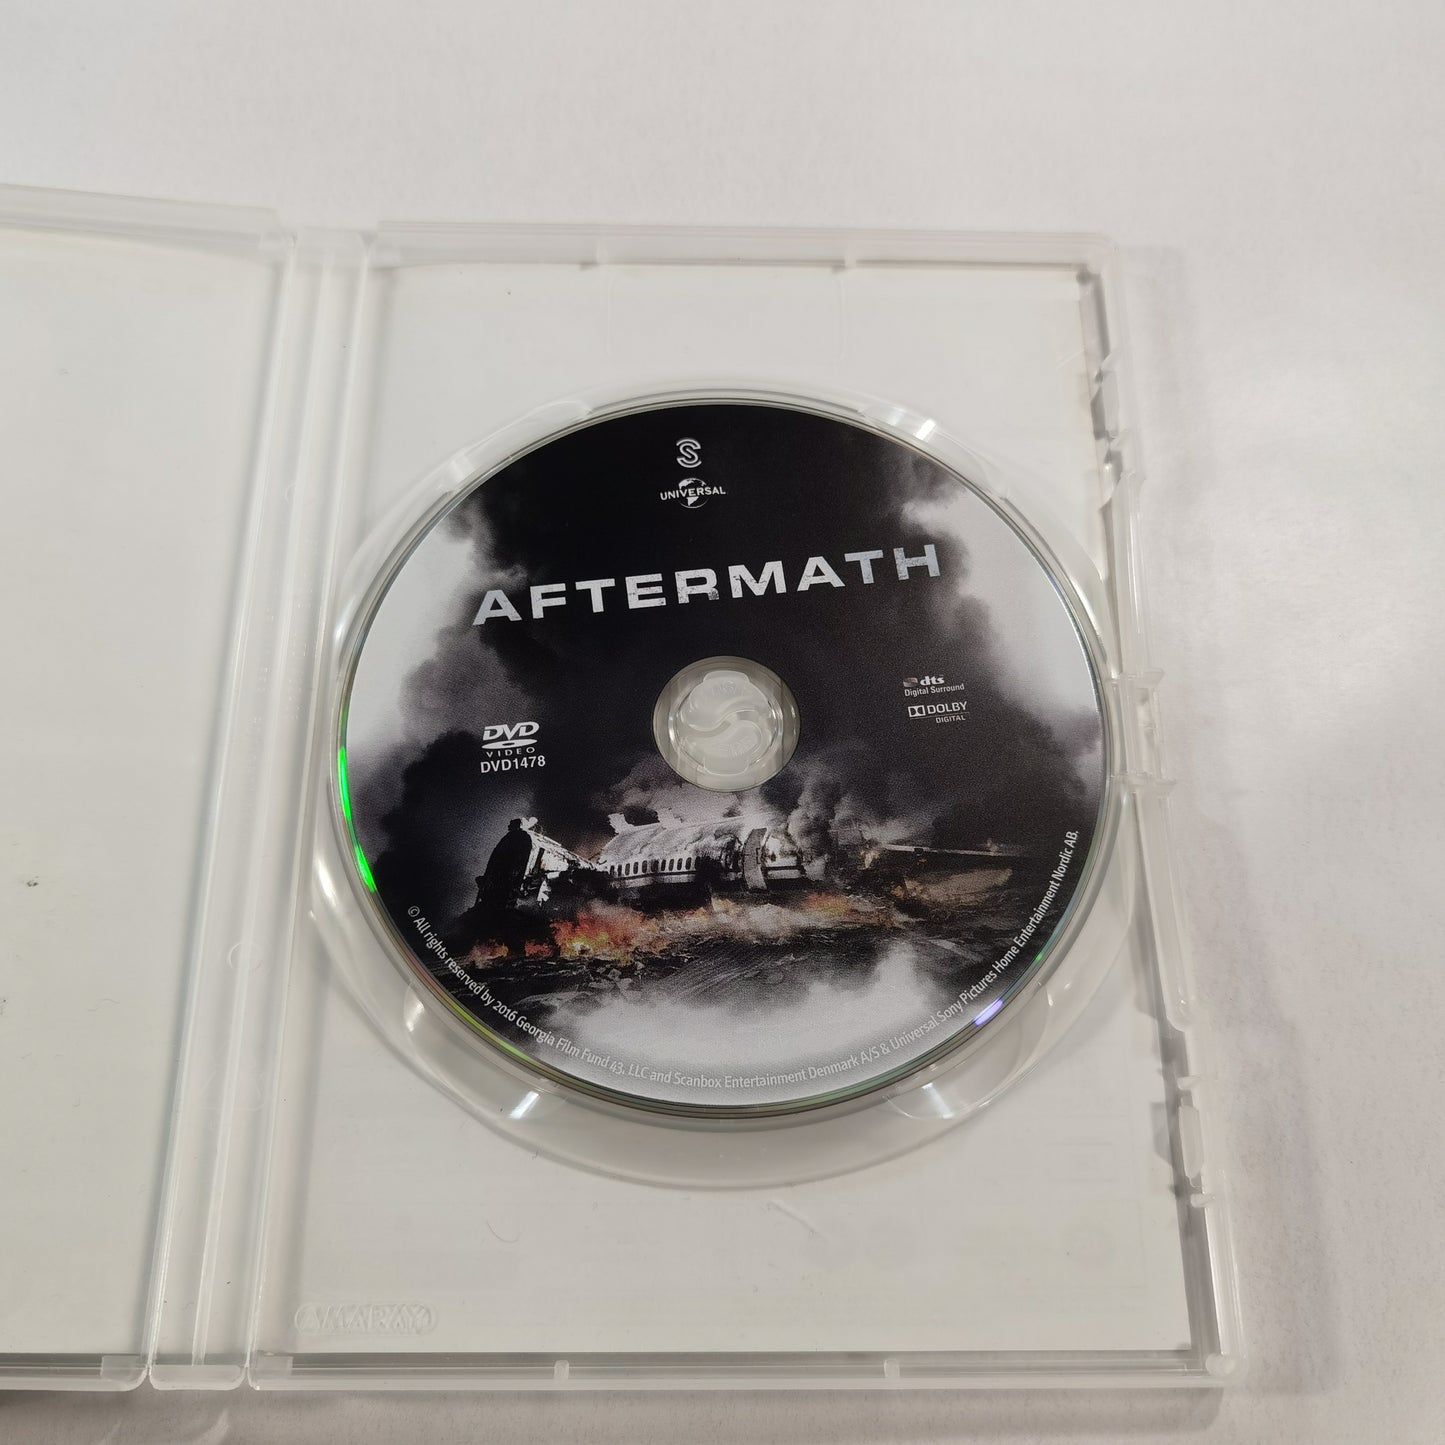 Aftermath (2017) - DVD SE NO DK FI 2017 RC